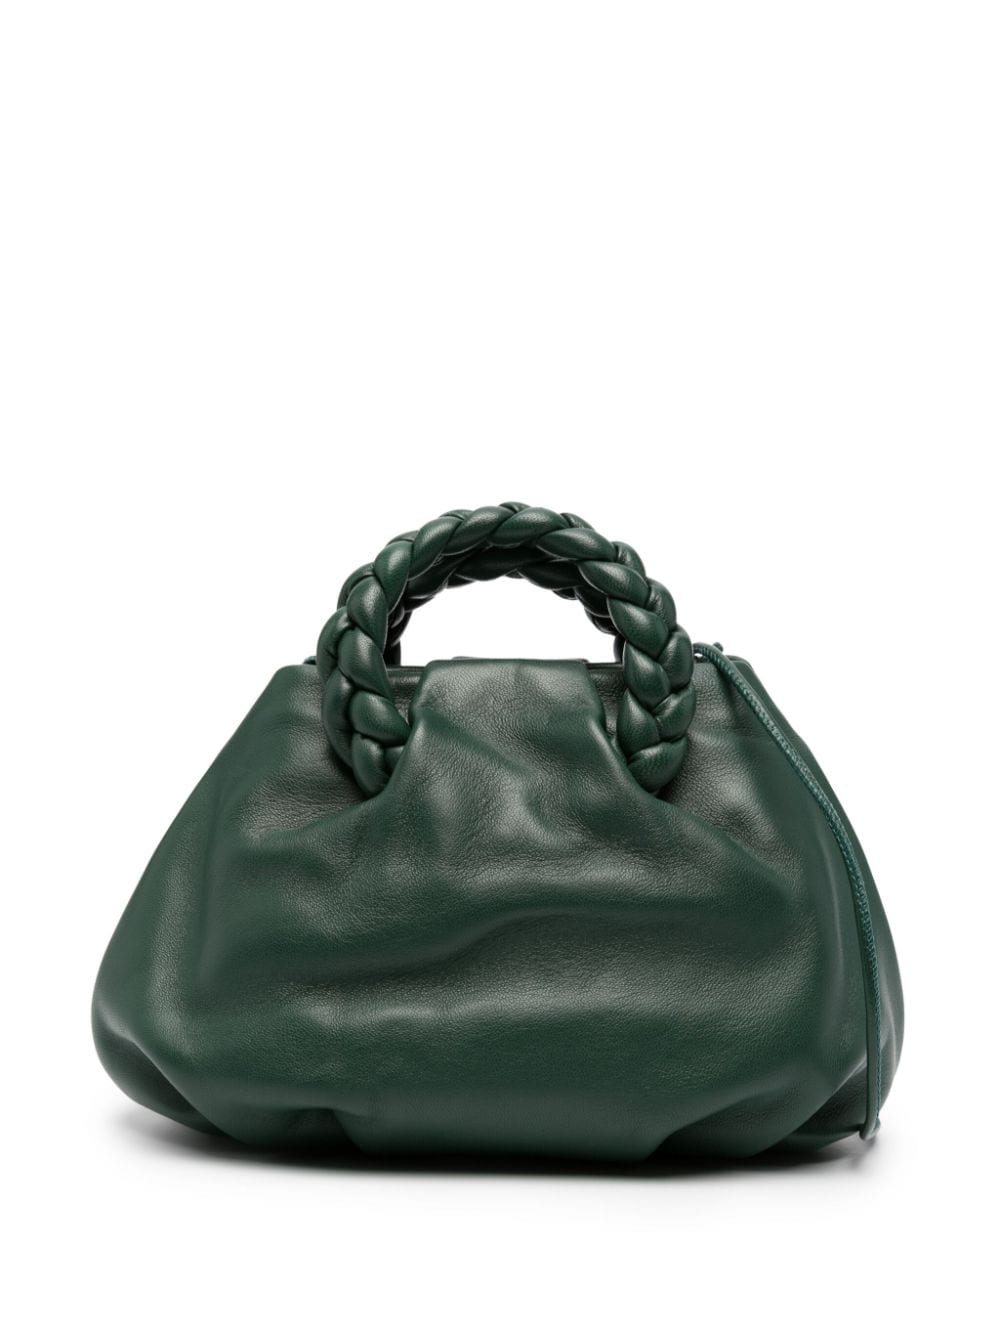 Bombon braided handle leather handbag by Hereu